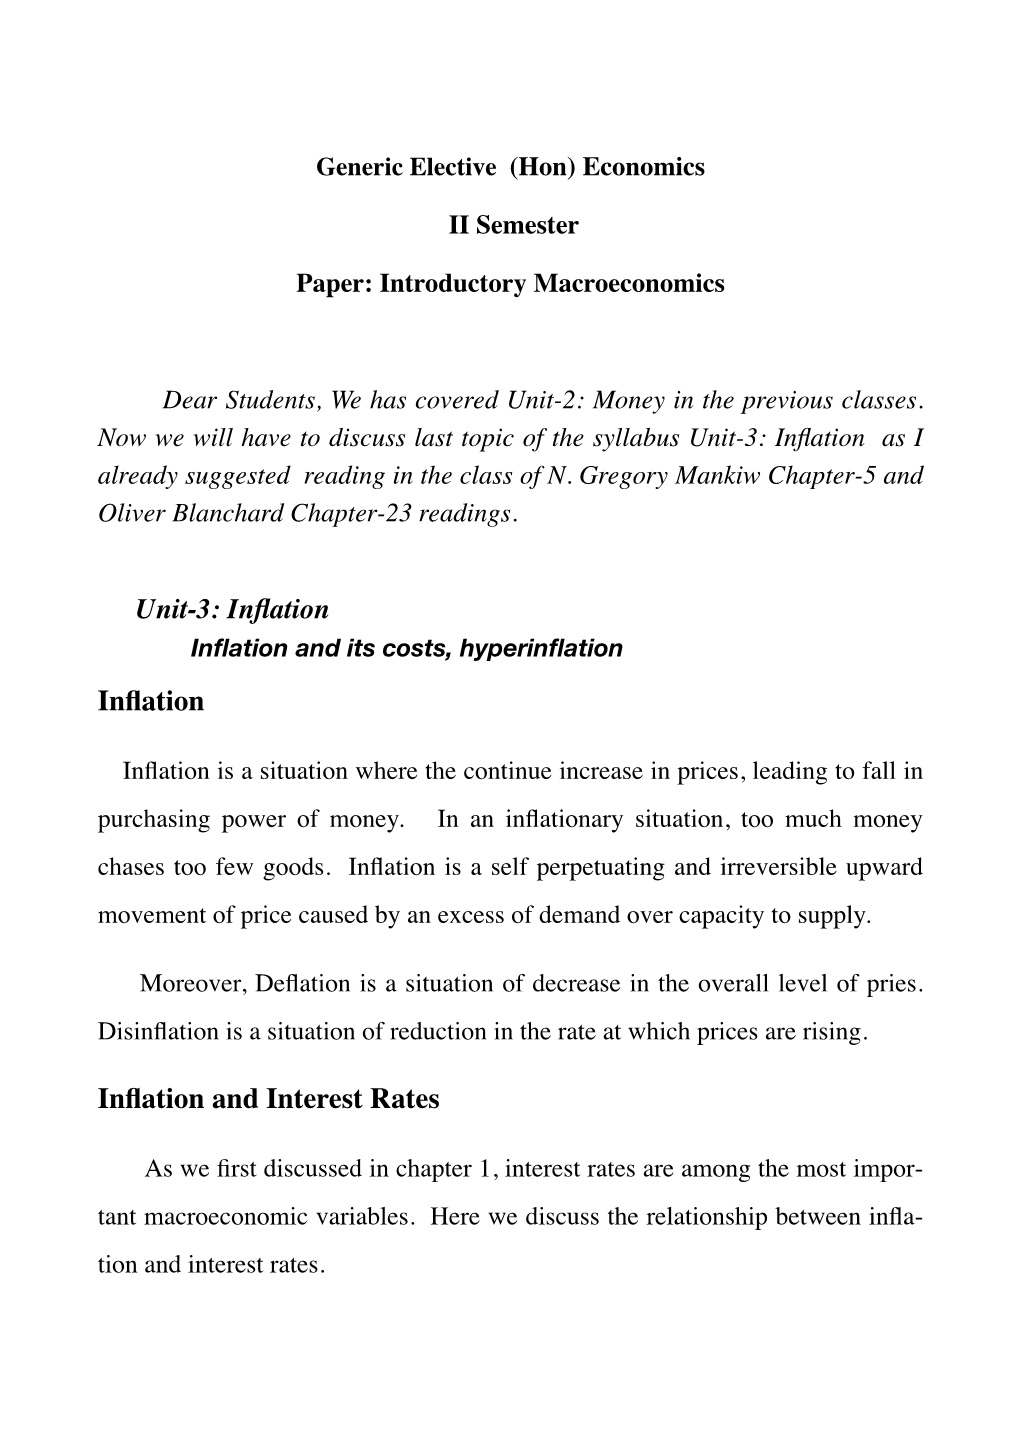 6 WEEK GE(Hon) Economics Iith Semeter-Introductory Macroeconomics